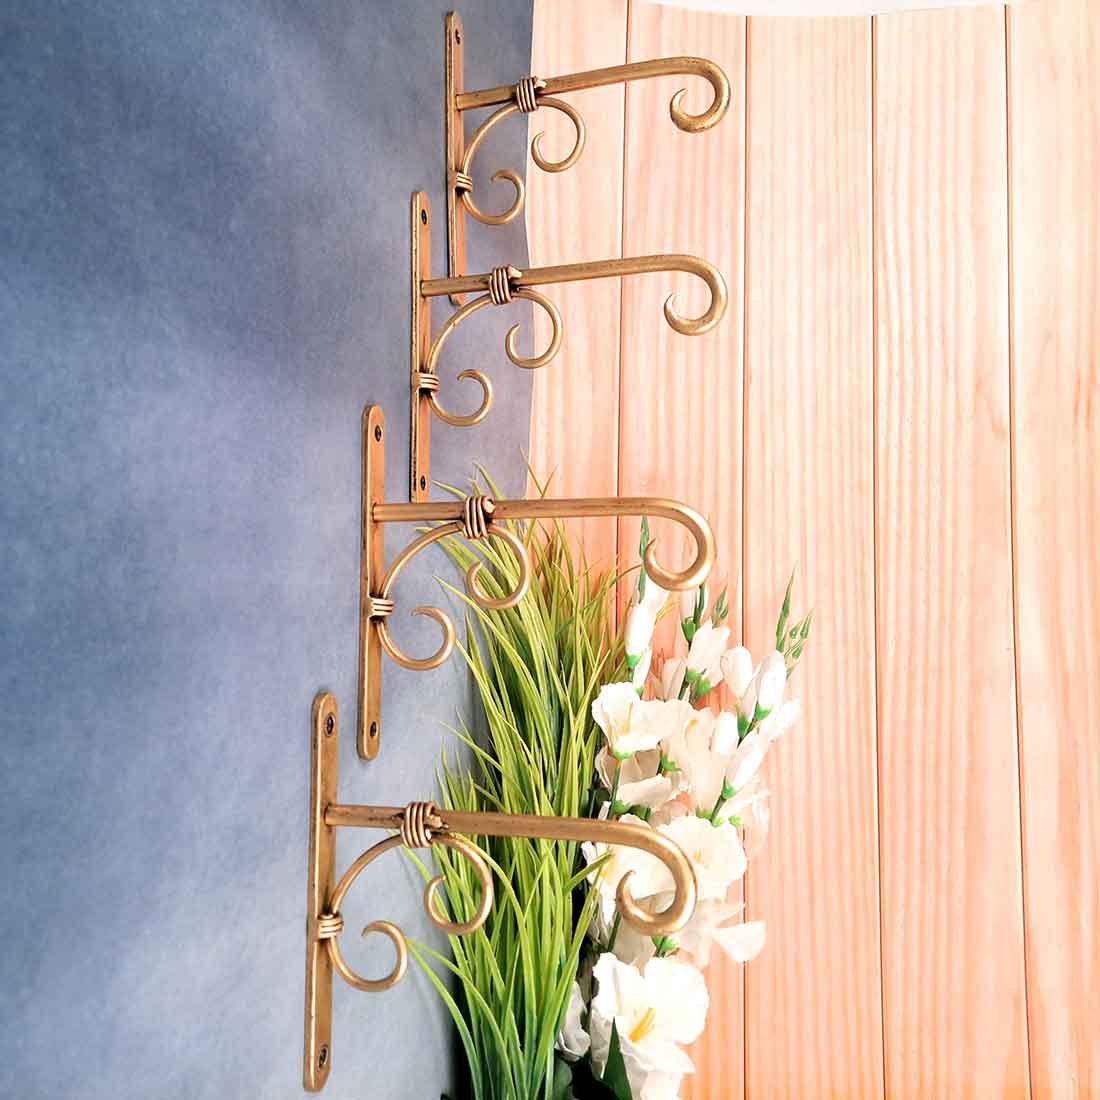 Metal Wall Hook - For Hanging Pots, Plants & Votives - 8 Inch -Apkamart #style_ pack of 4